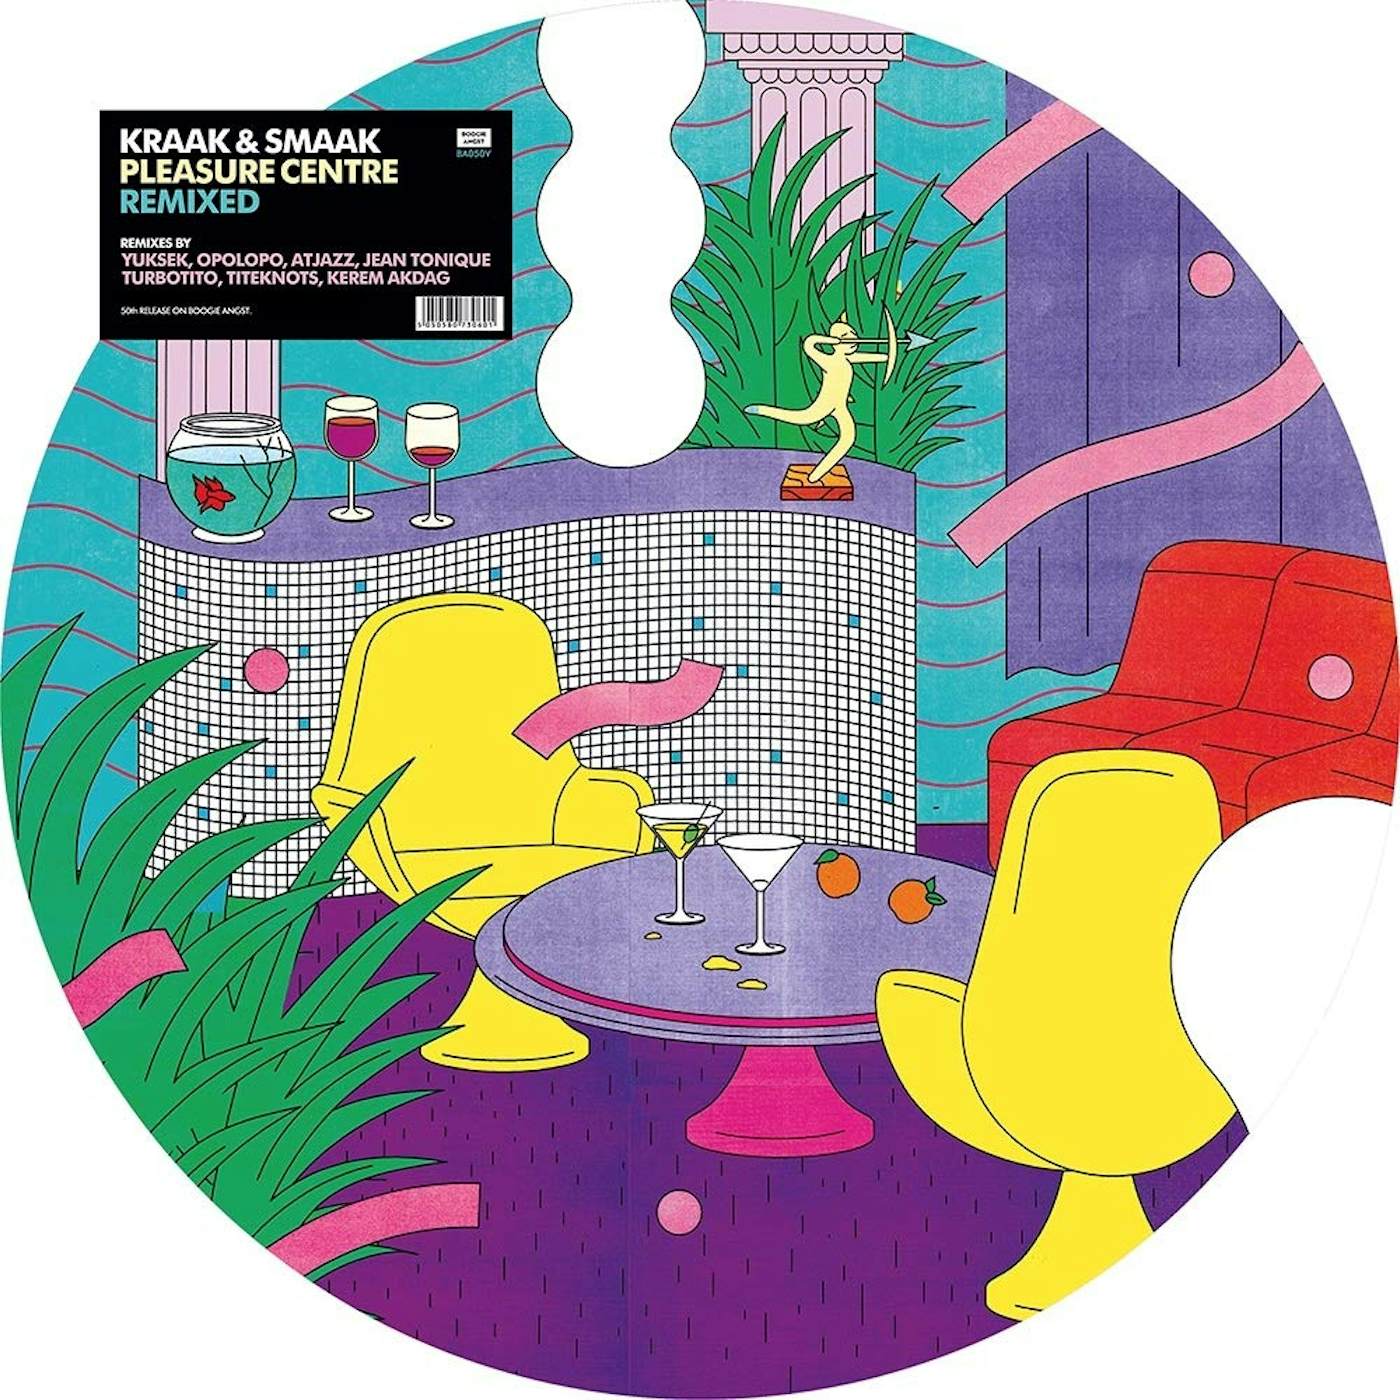 Kraak & Smaak Pleasure Centre Remixed Vinyl Record